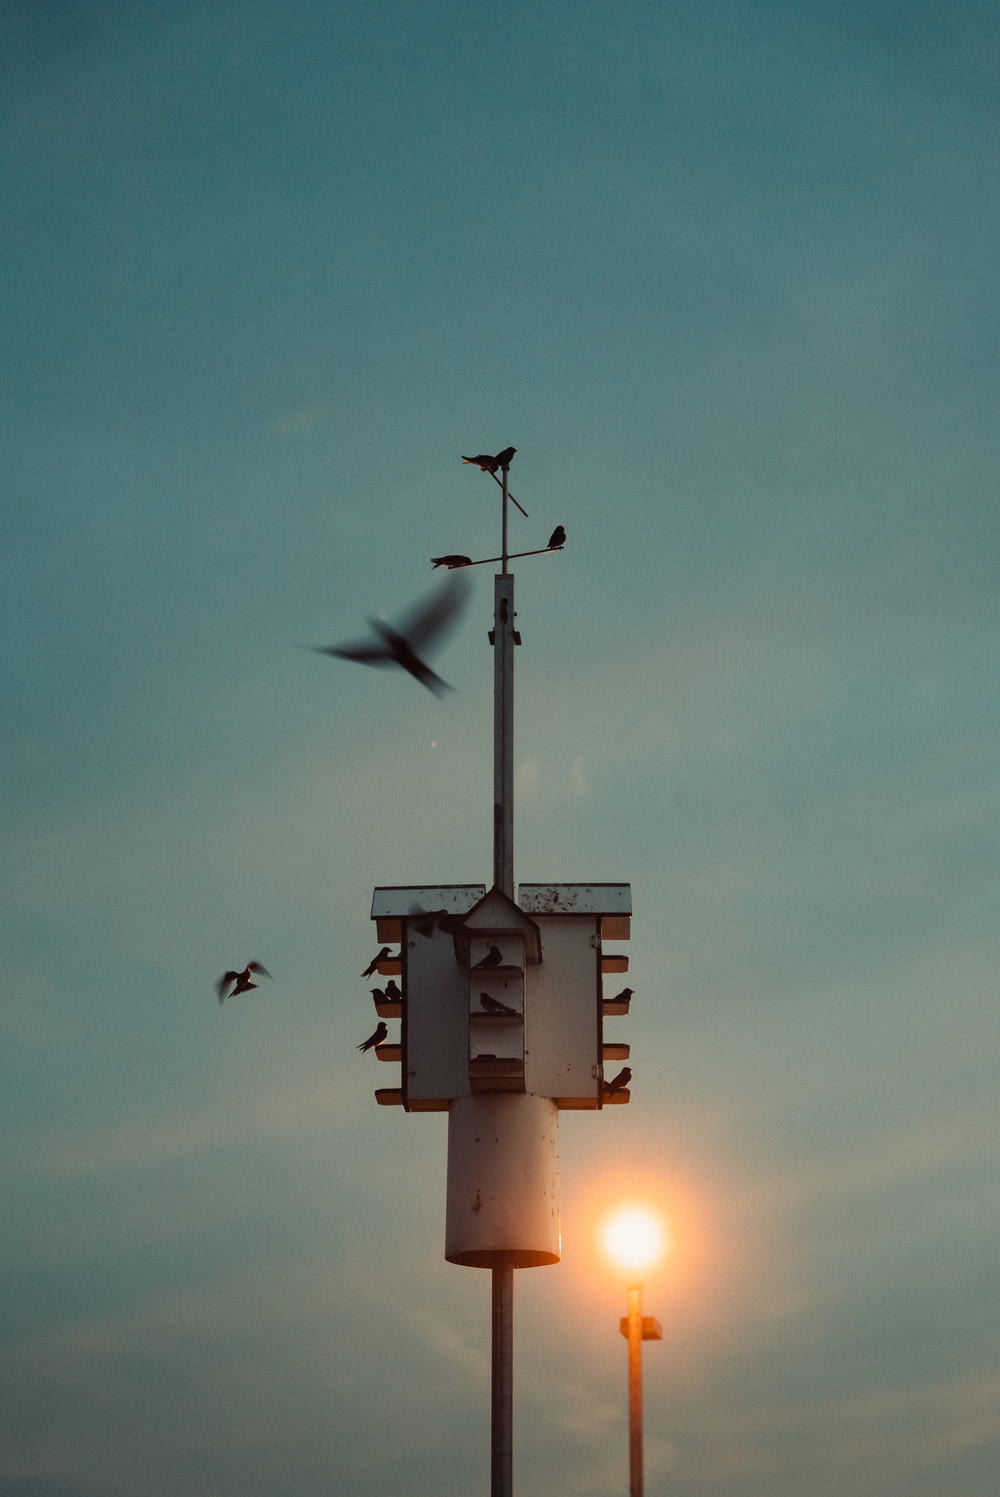 a flock of birds flying over a light pole